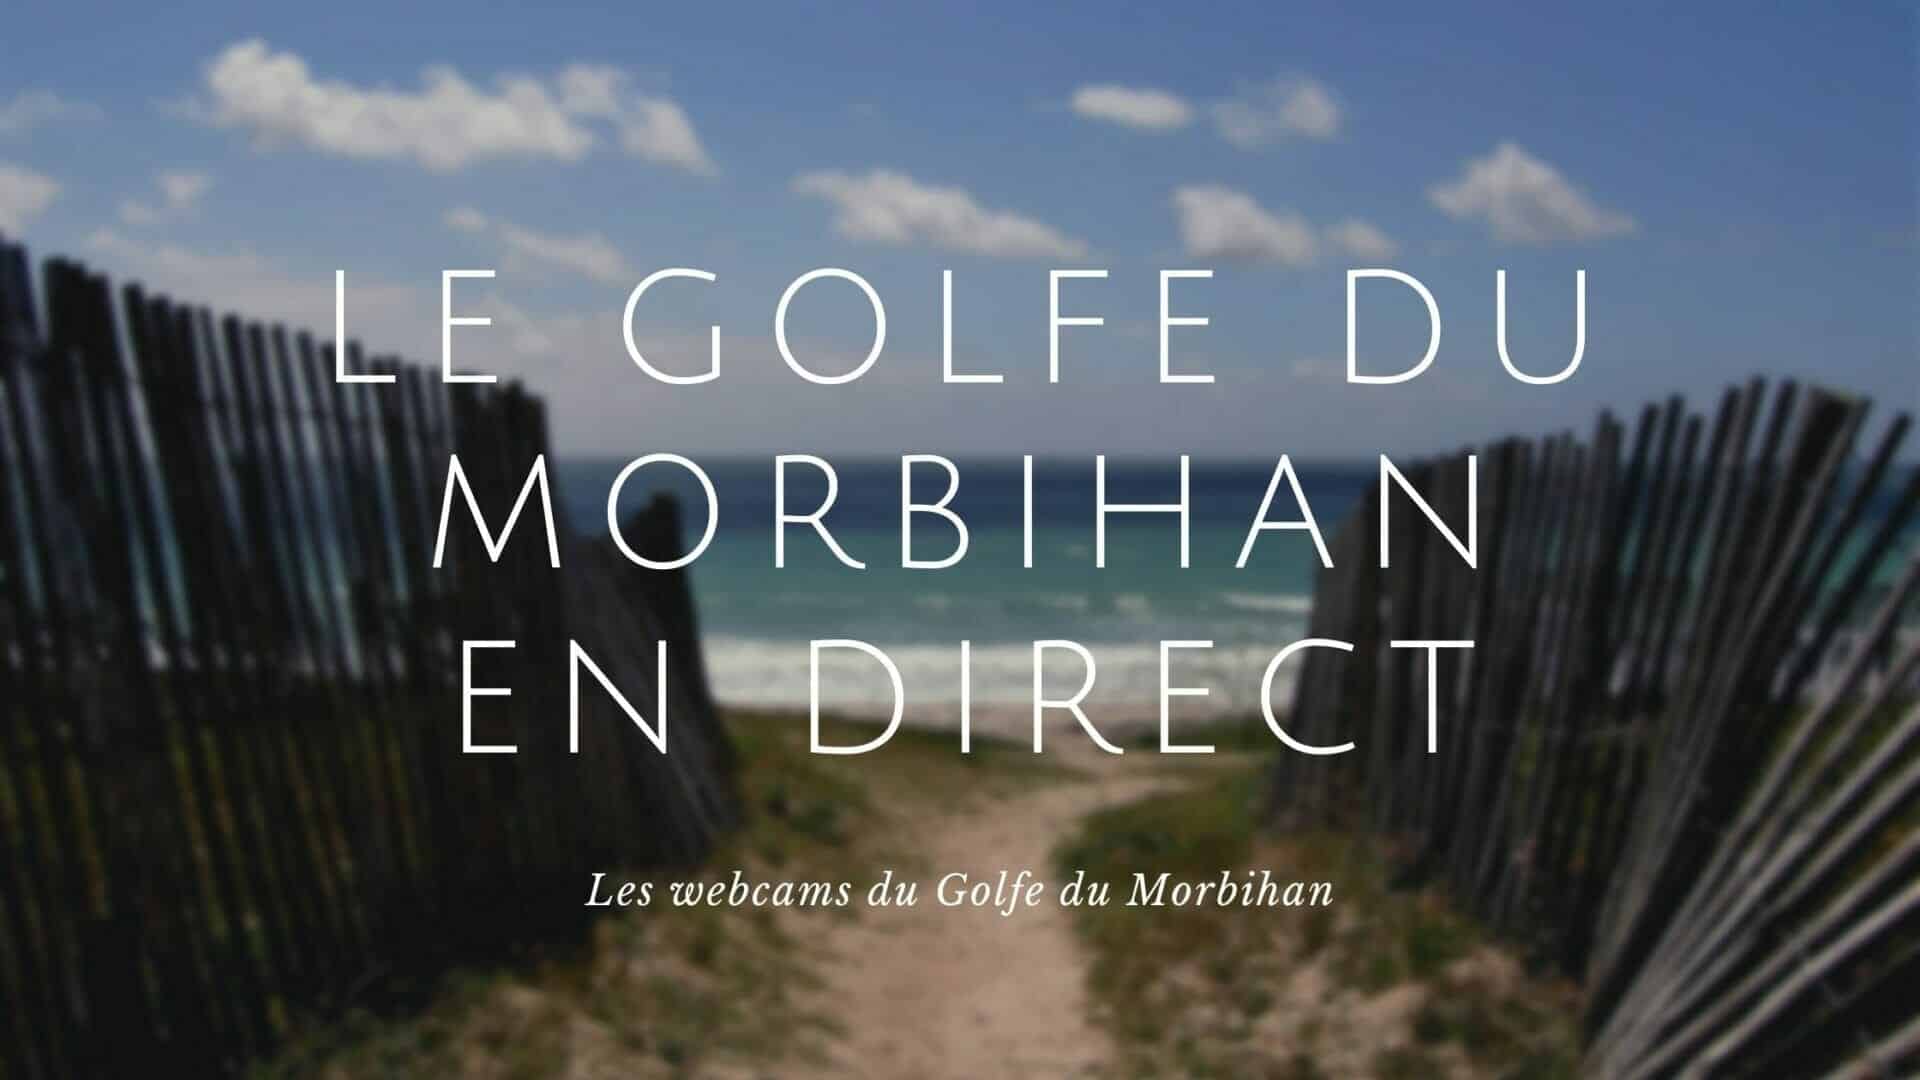 Webcams : le Golfe du Morbihan en direct